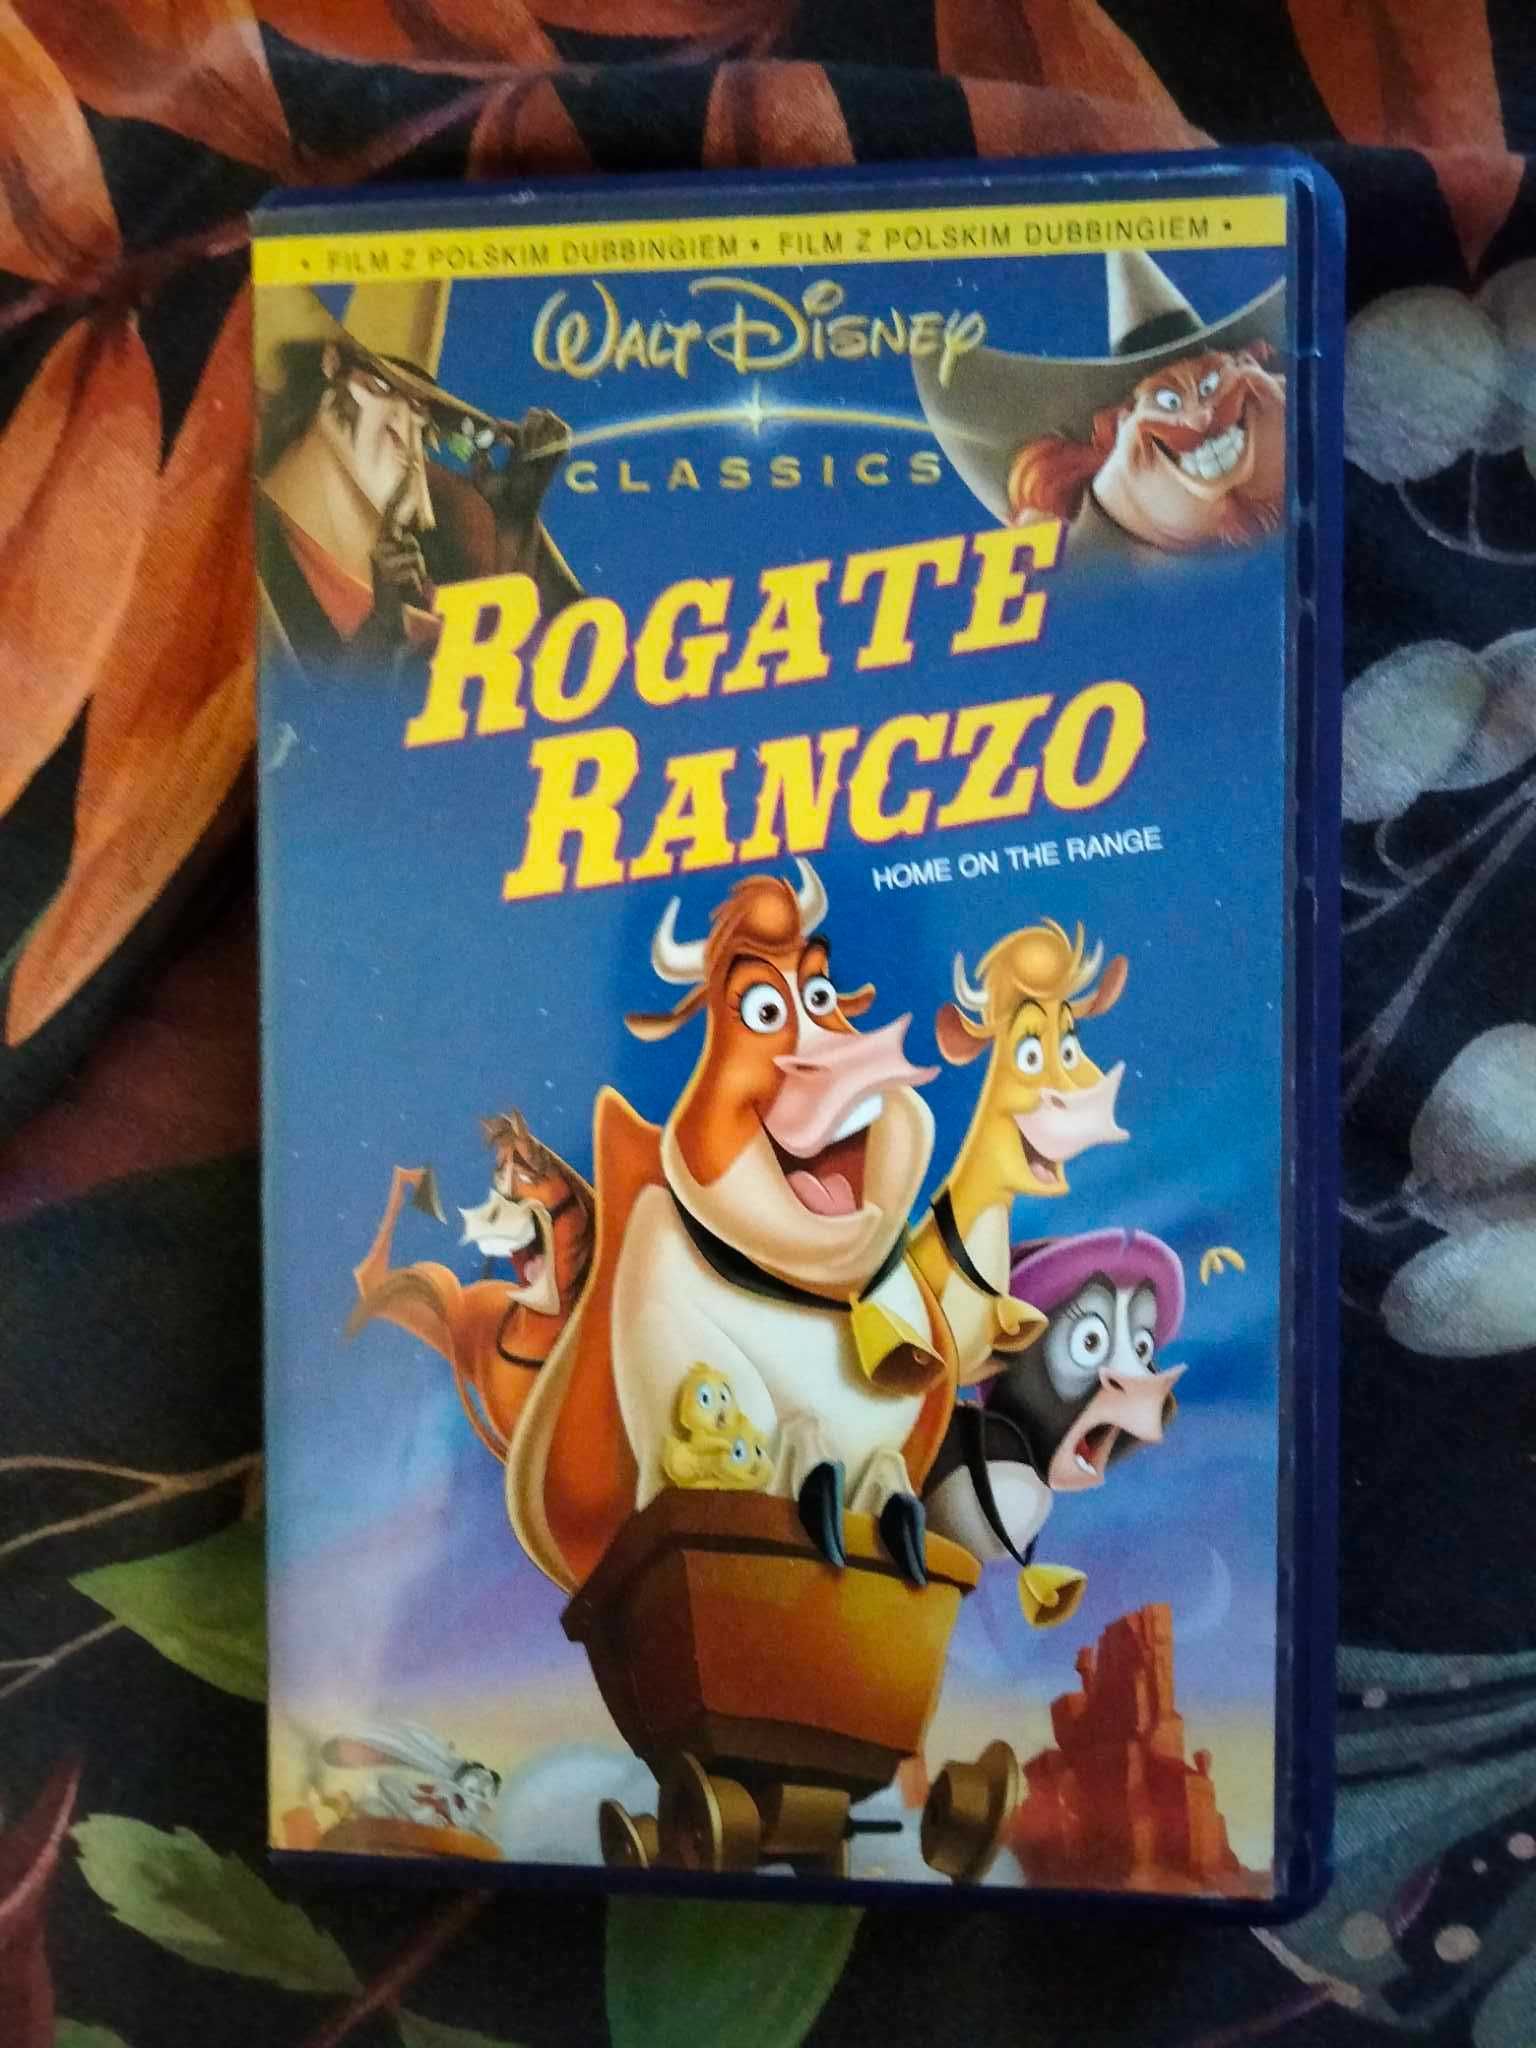 "Rogate ranczo" VHS